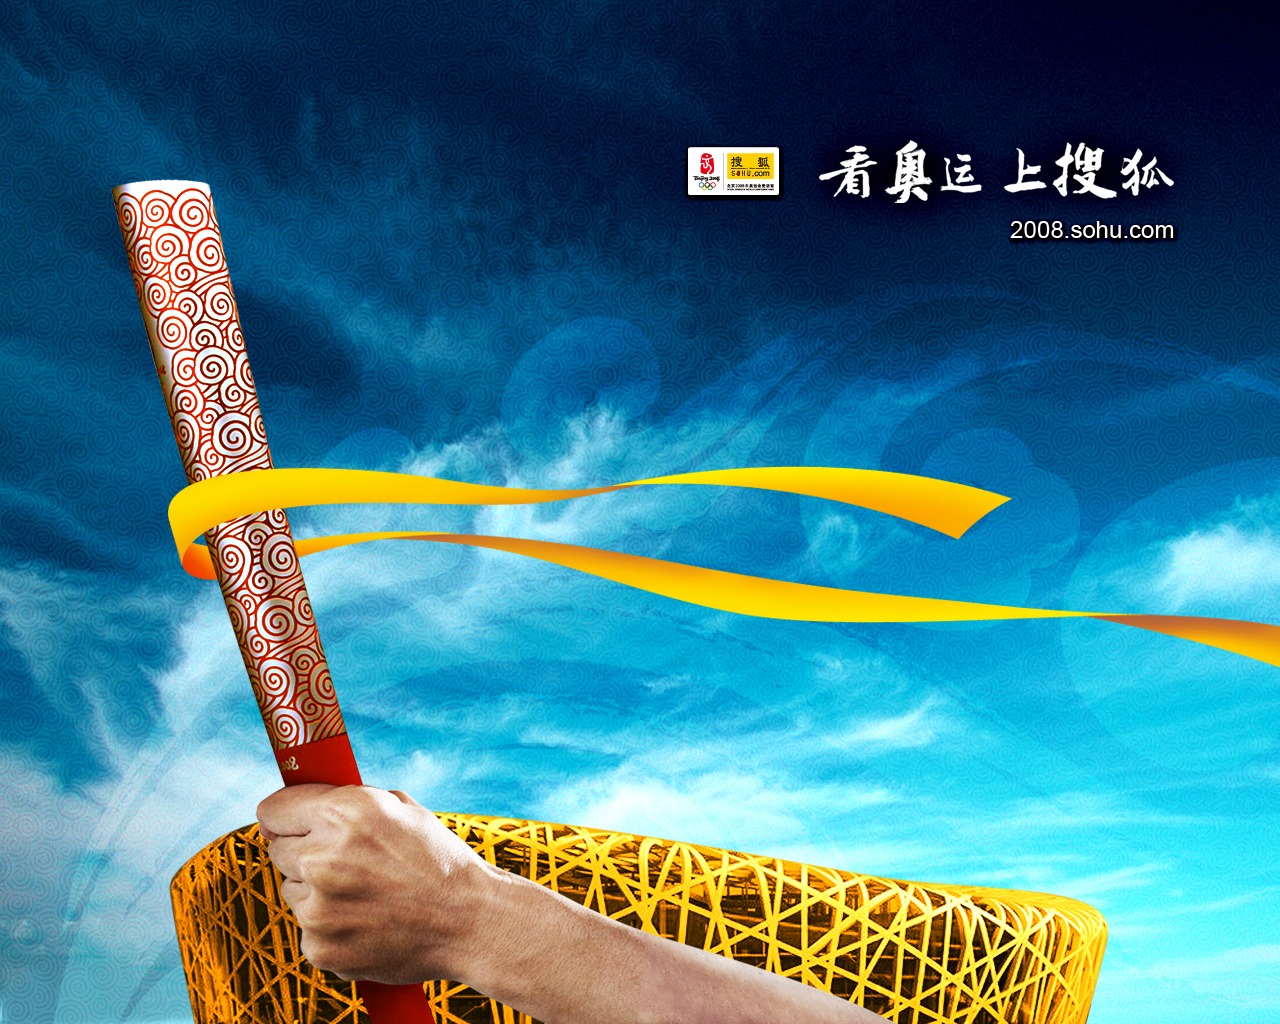 Fond d'écran Sohu série olympique #5 - 1280x1024